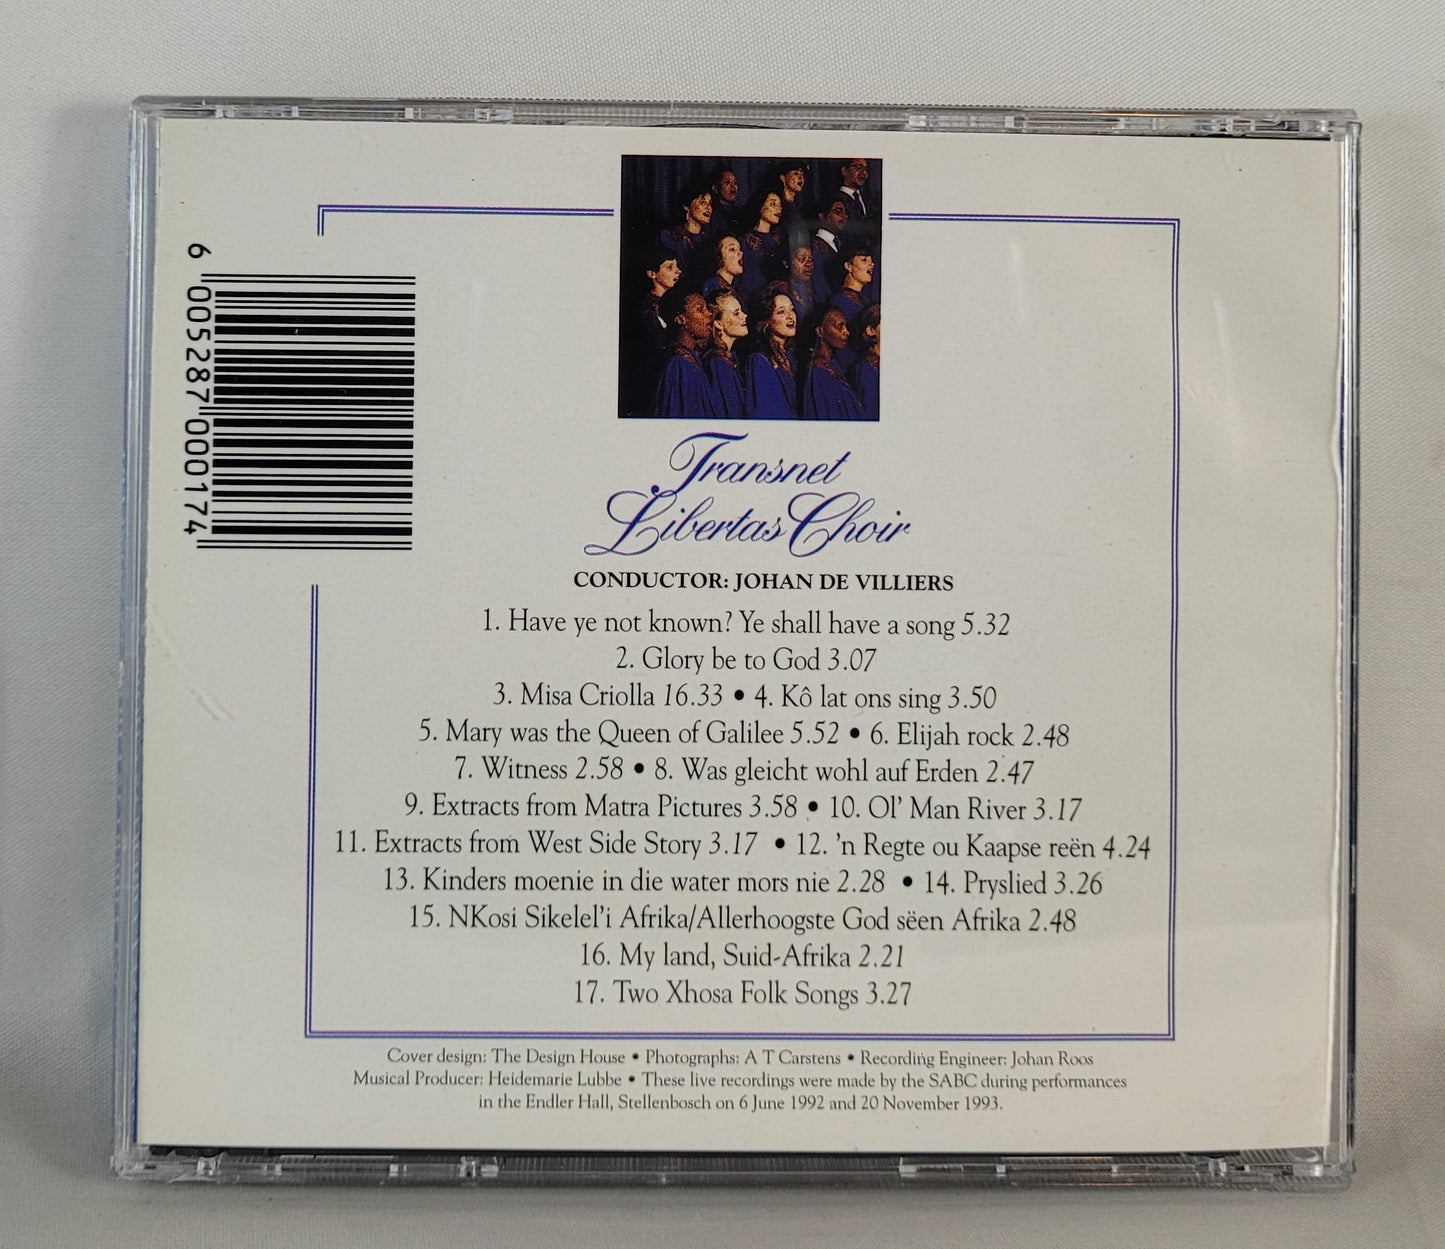 Transnet Libertas Choir - In Concert [CD]